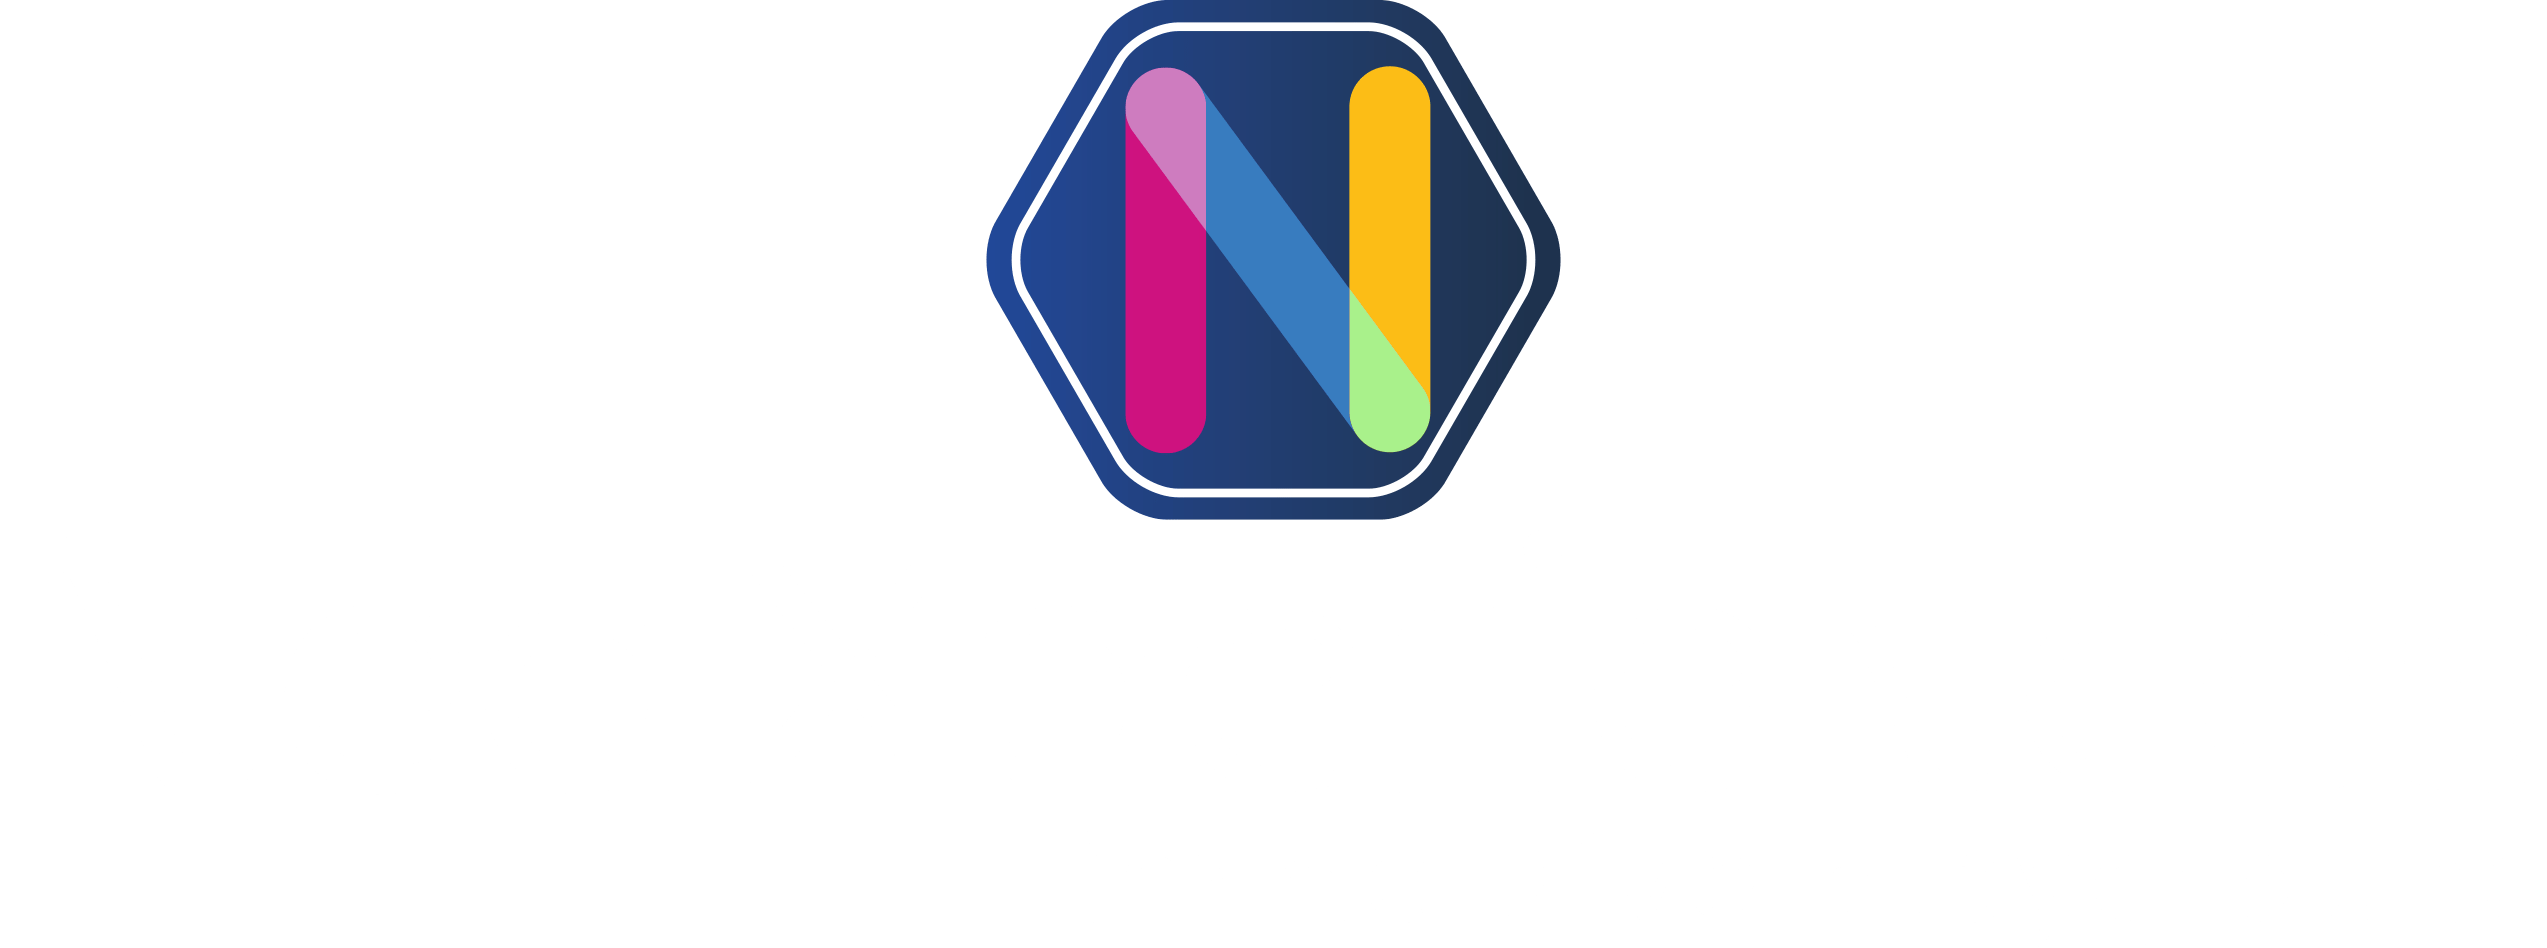 NeoXperiences Logo